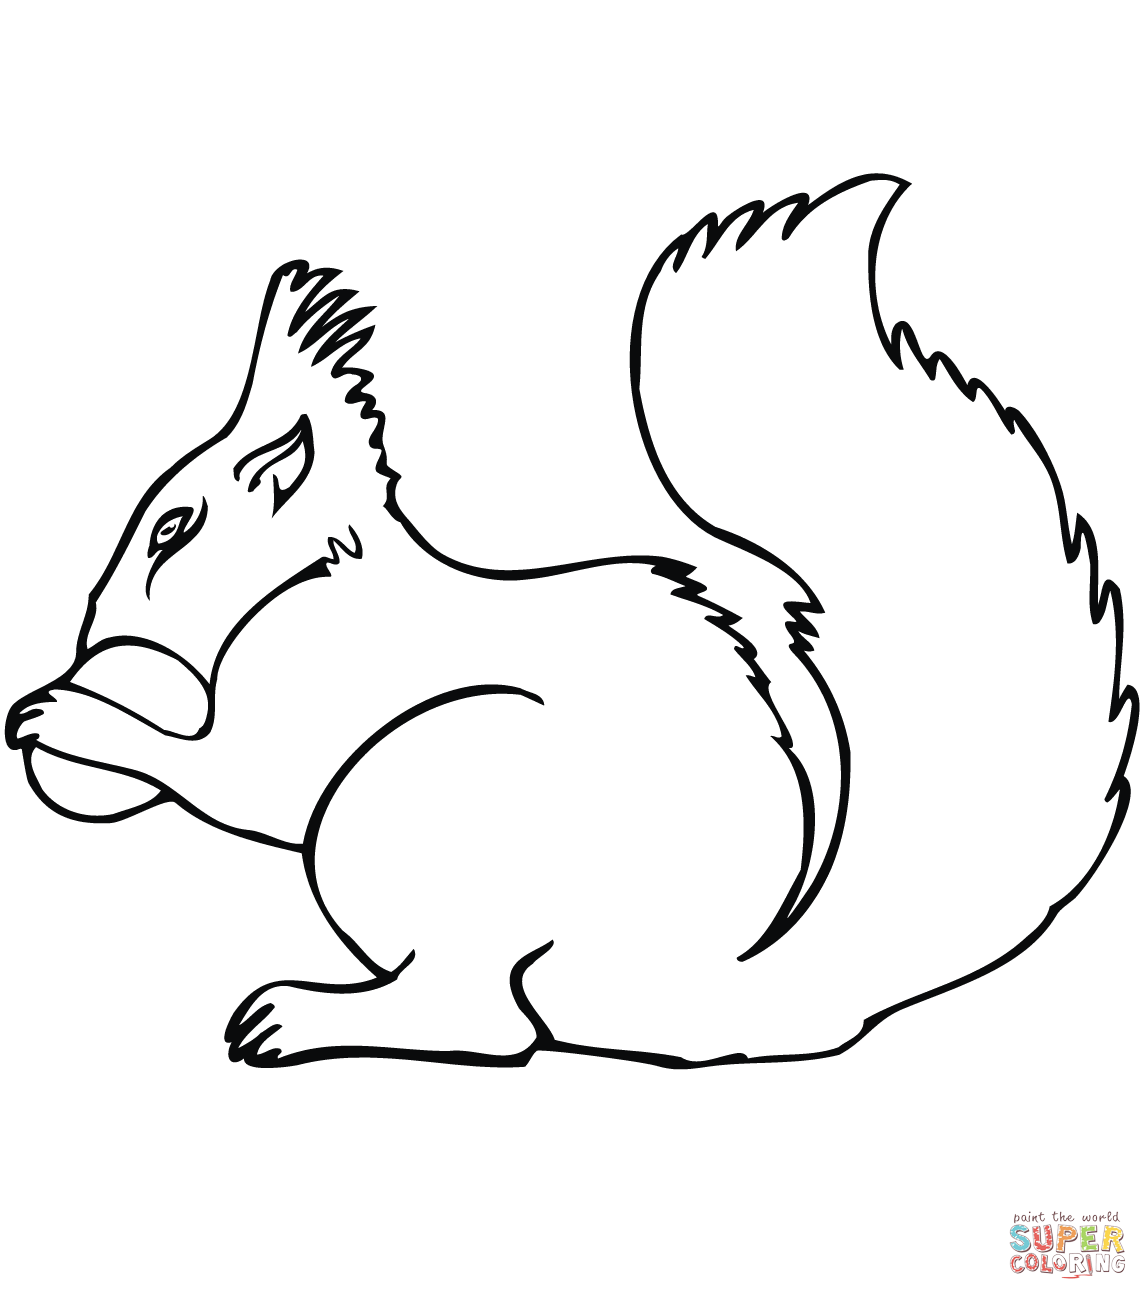 Cartoon Squirrel with Acorn coloring page | Free Printable ...